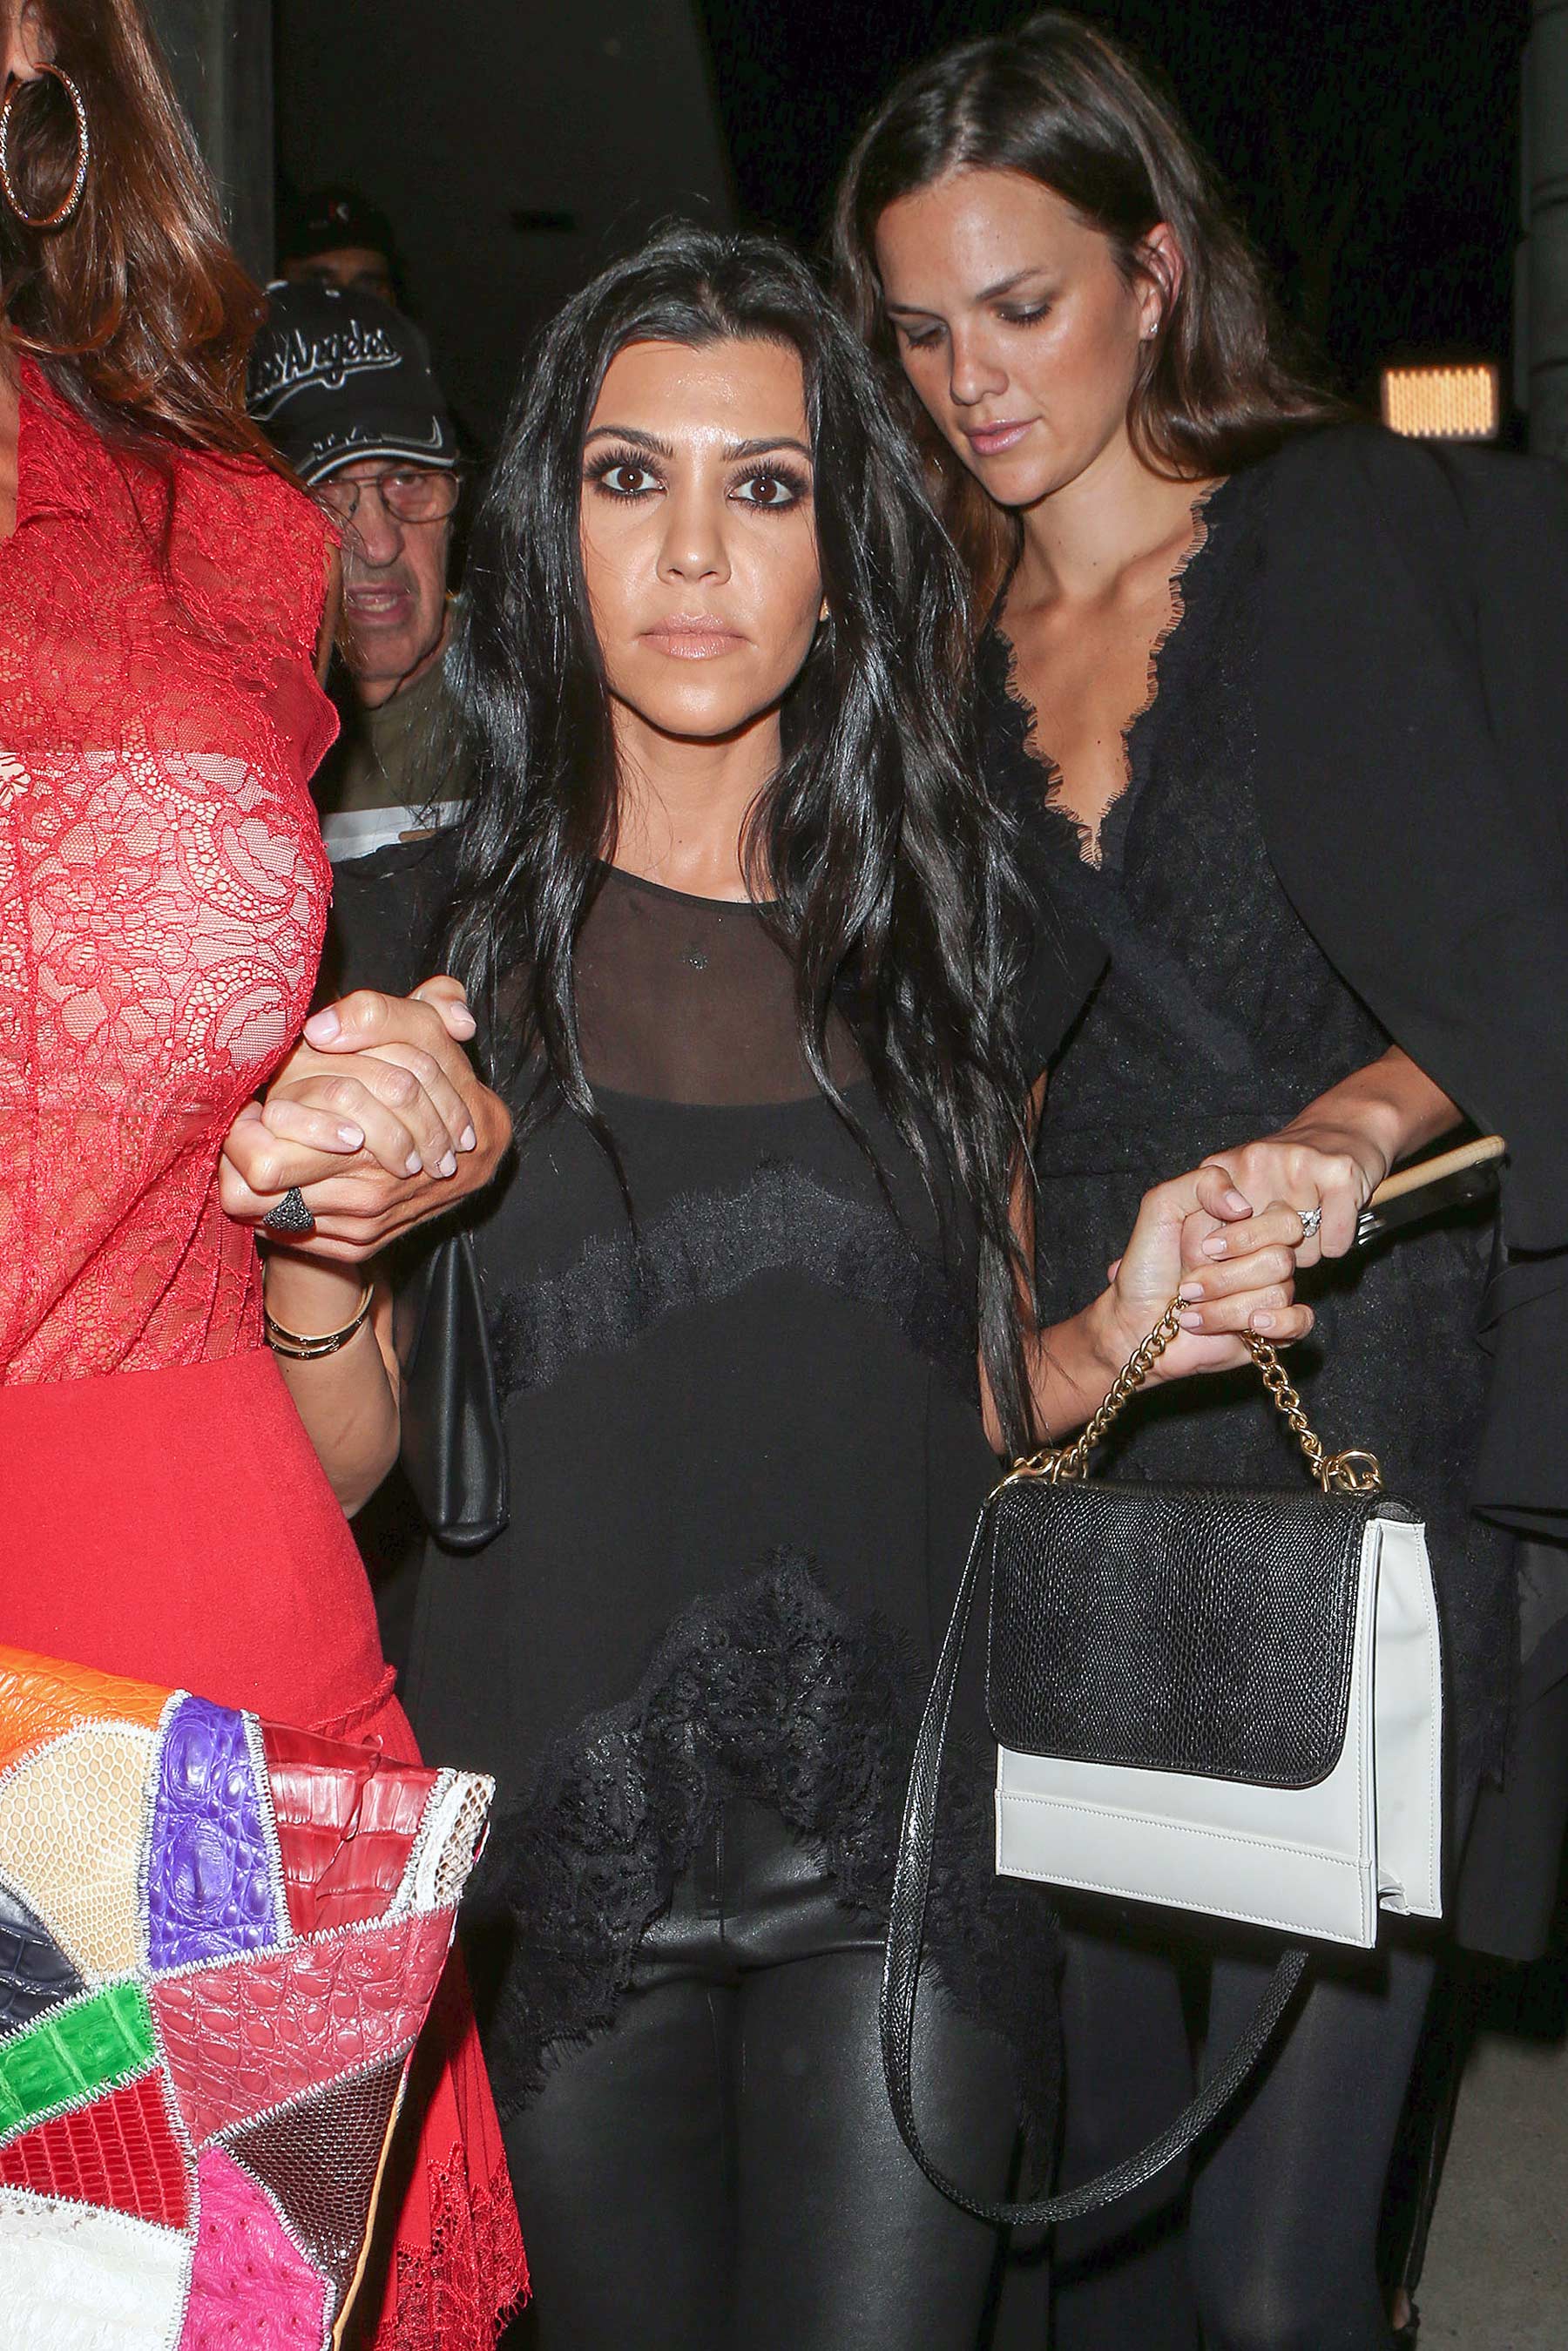 Kourtney Kardashian attends Brian Bowen Smith Metallic Life Exhibit